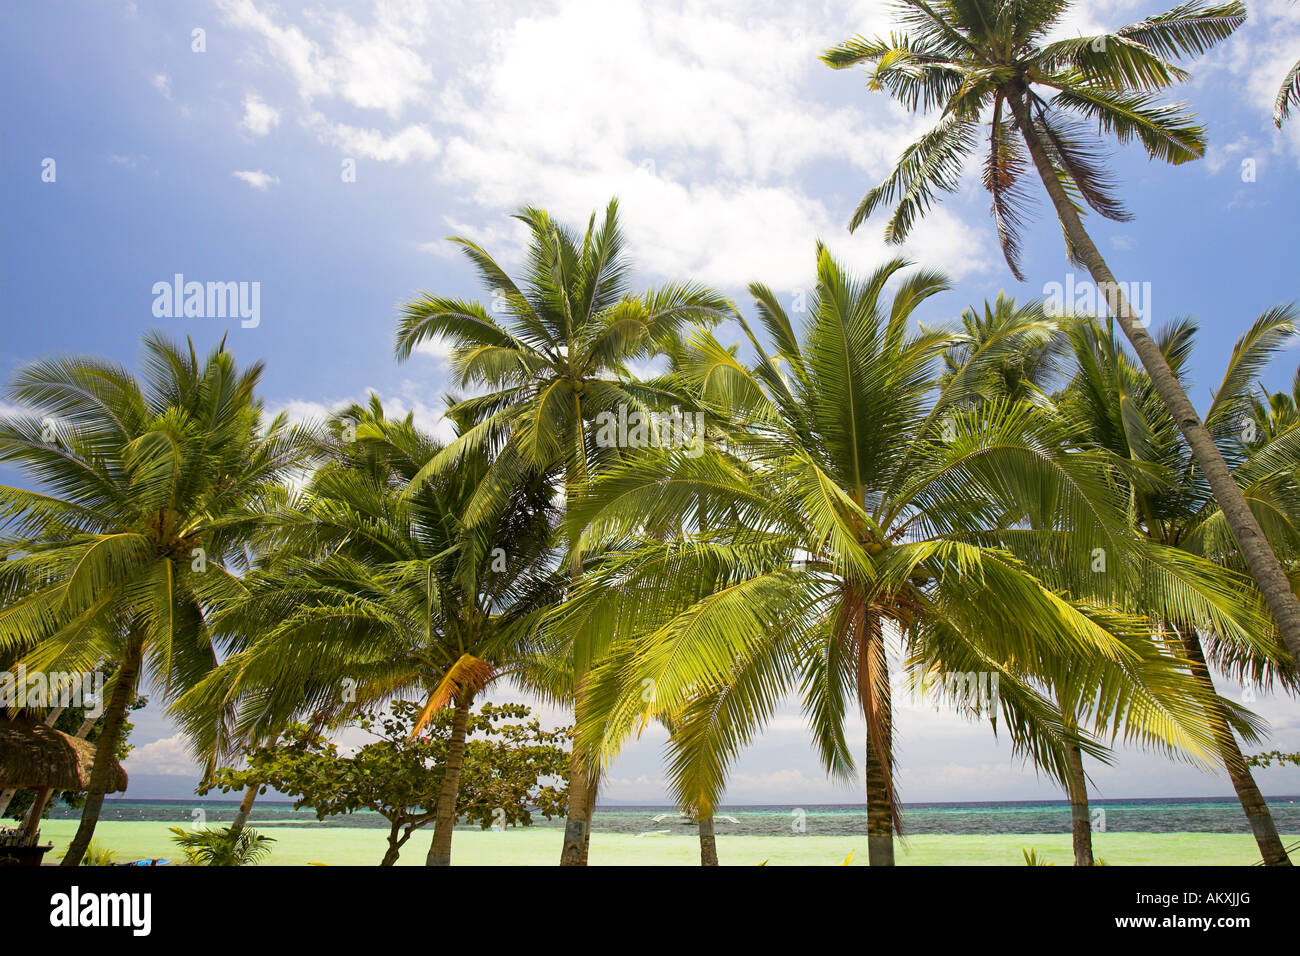 Palmtrees near the Ocean, Philippines Stock Photo - Alamy